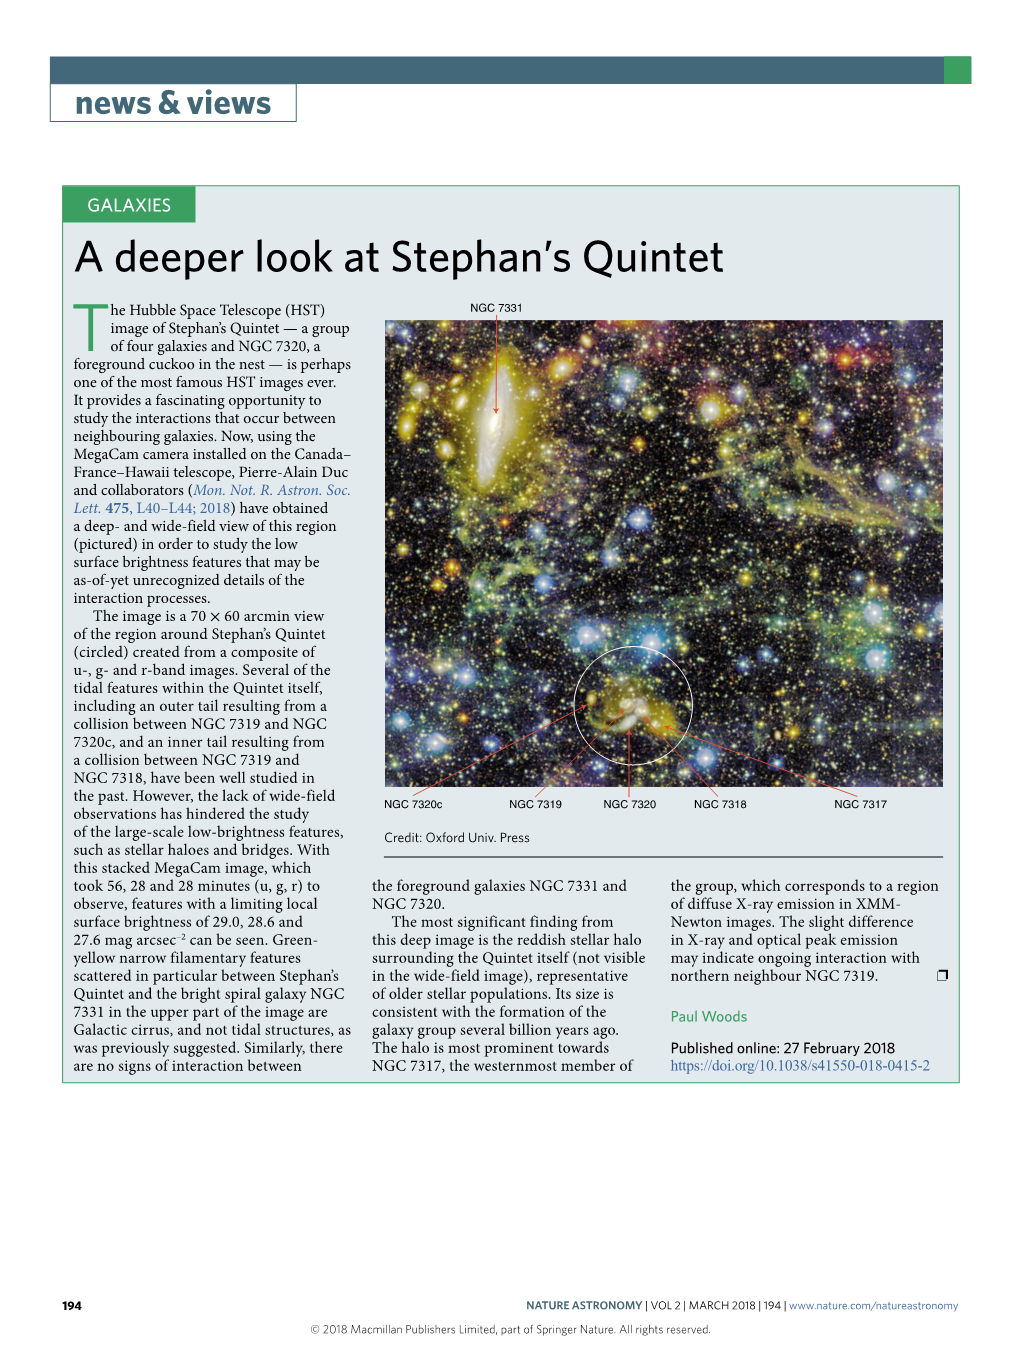 A Deeper Look at Stephan's Quintet